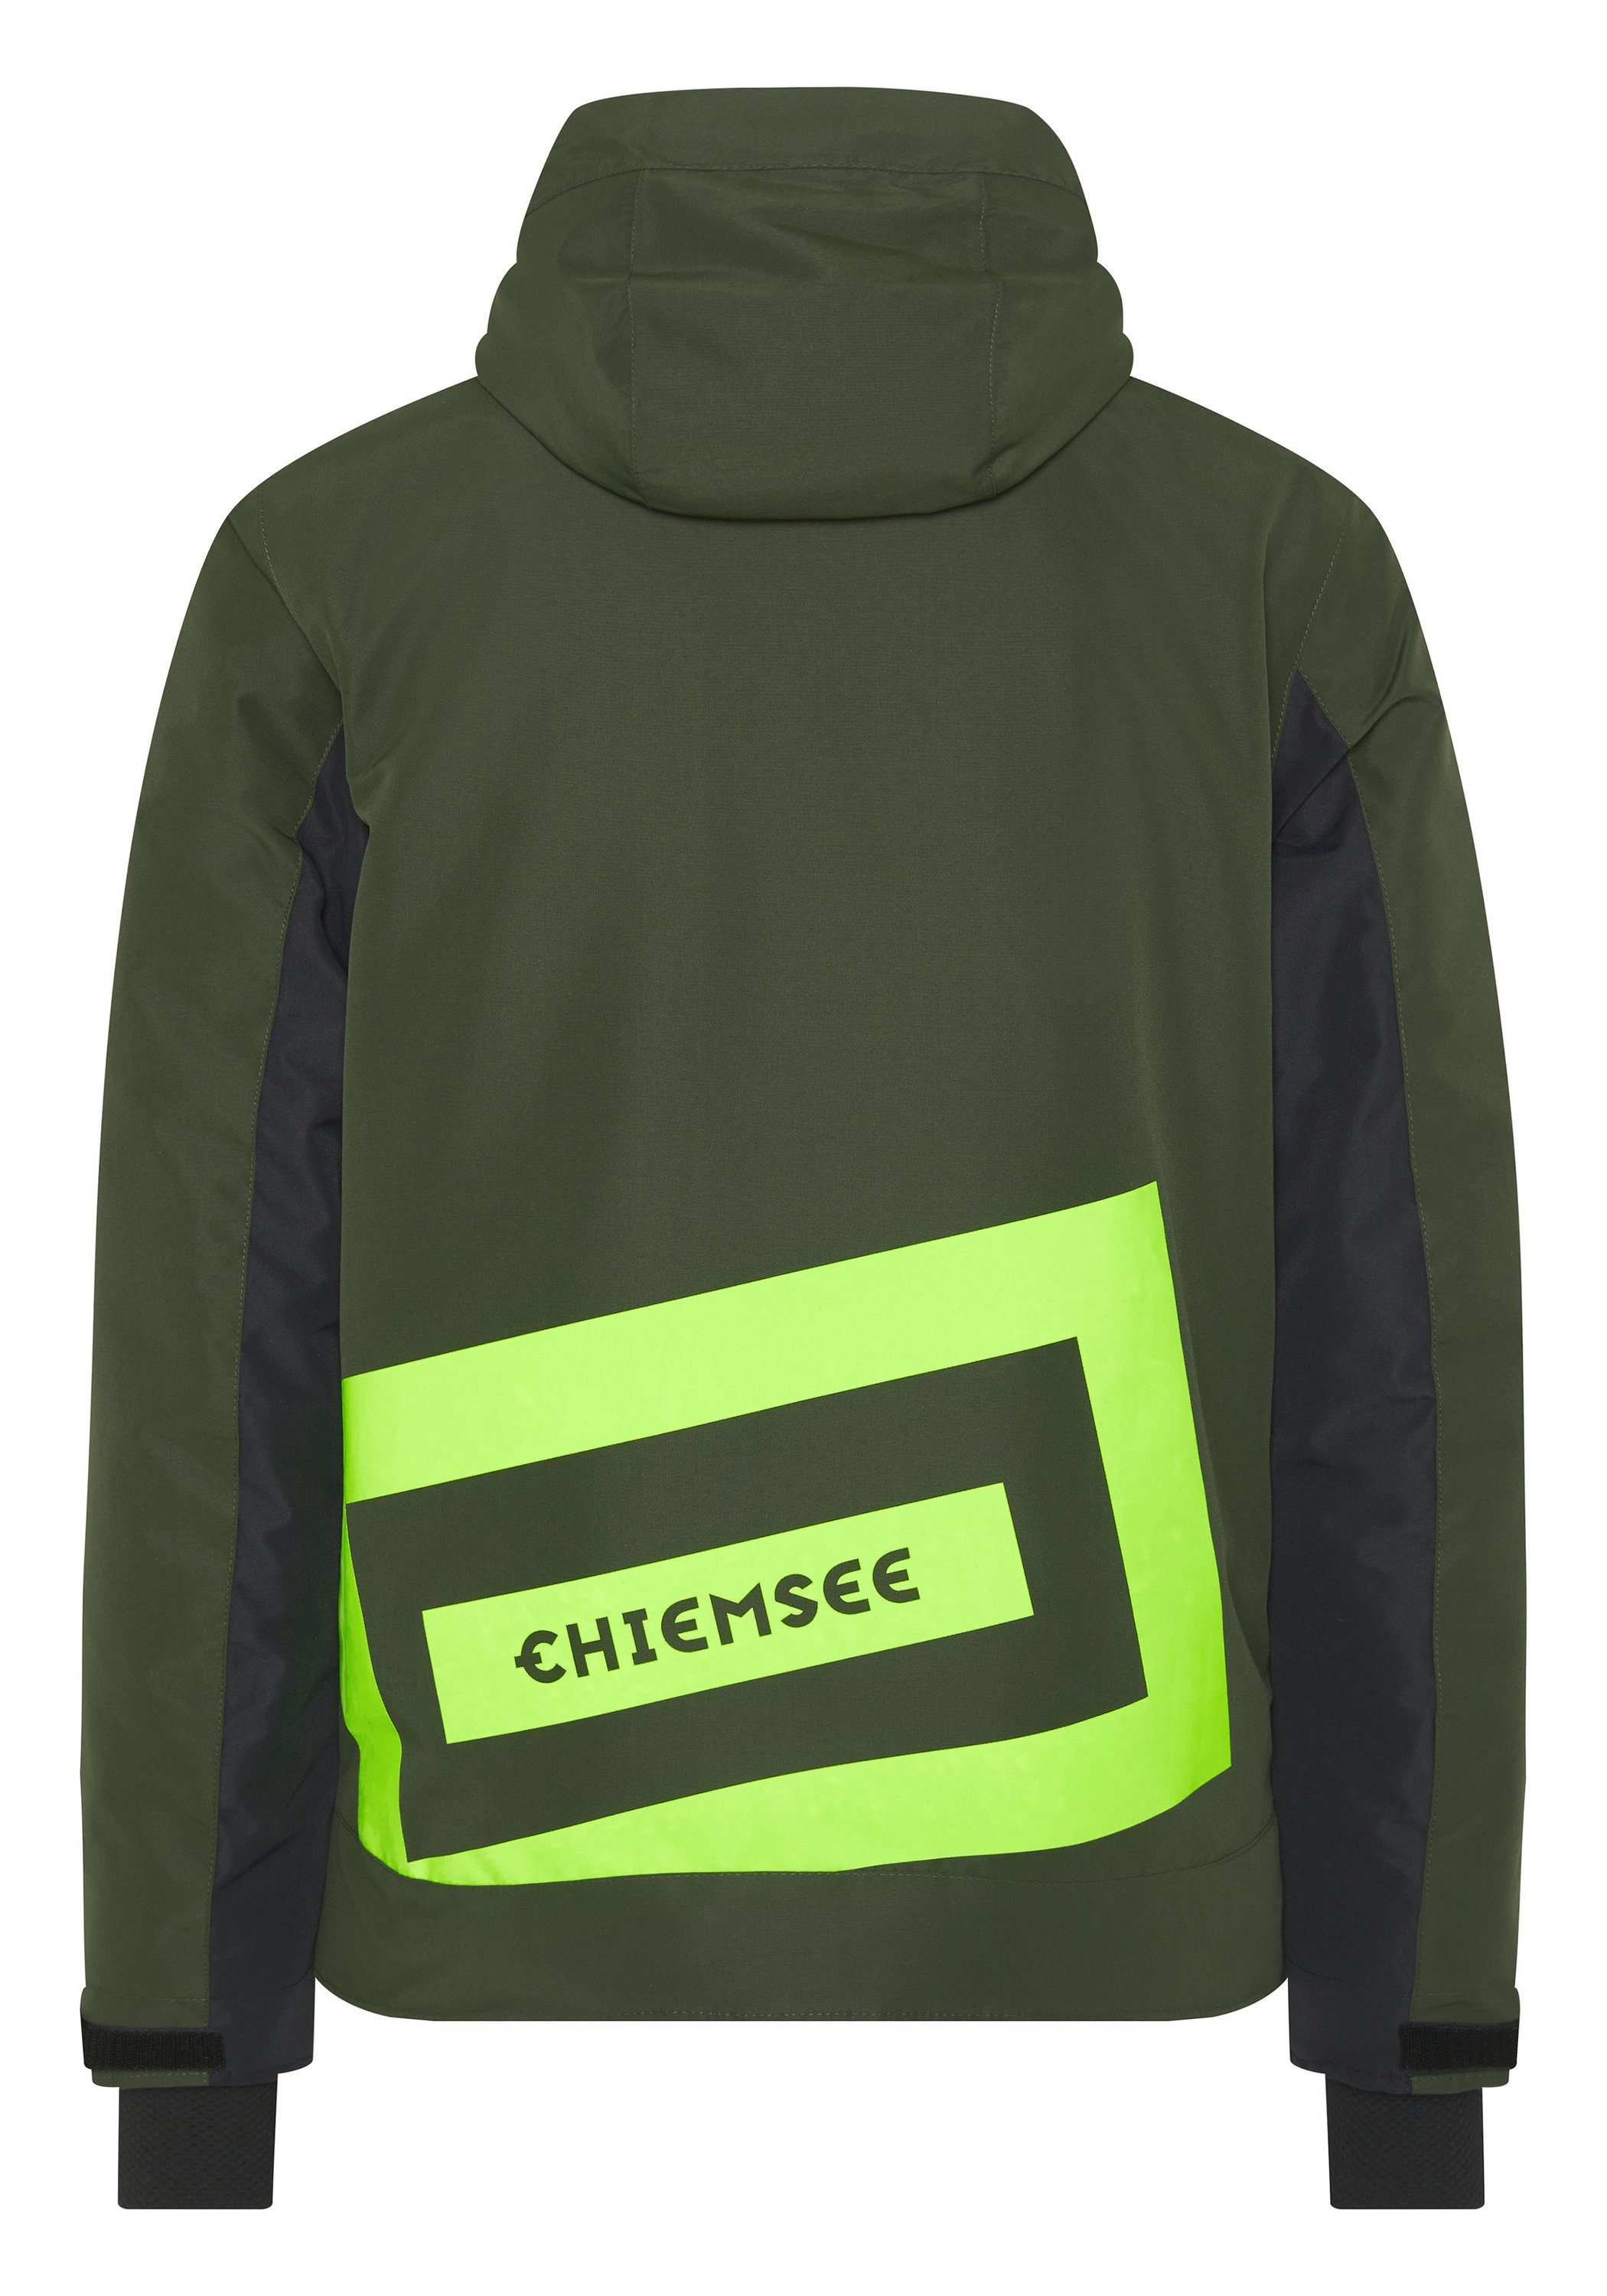 1 Green Chiemsee 19-0417 Skijacke PLUS-MINUS-Design Kombu im Skijacke